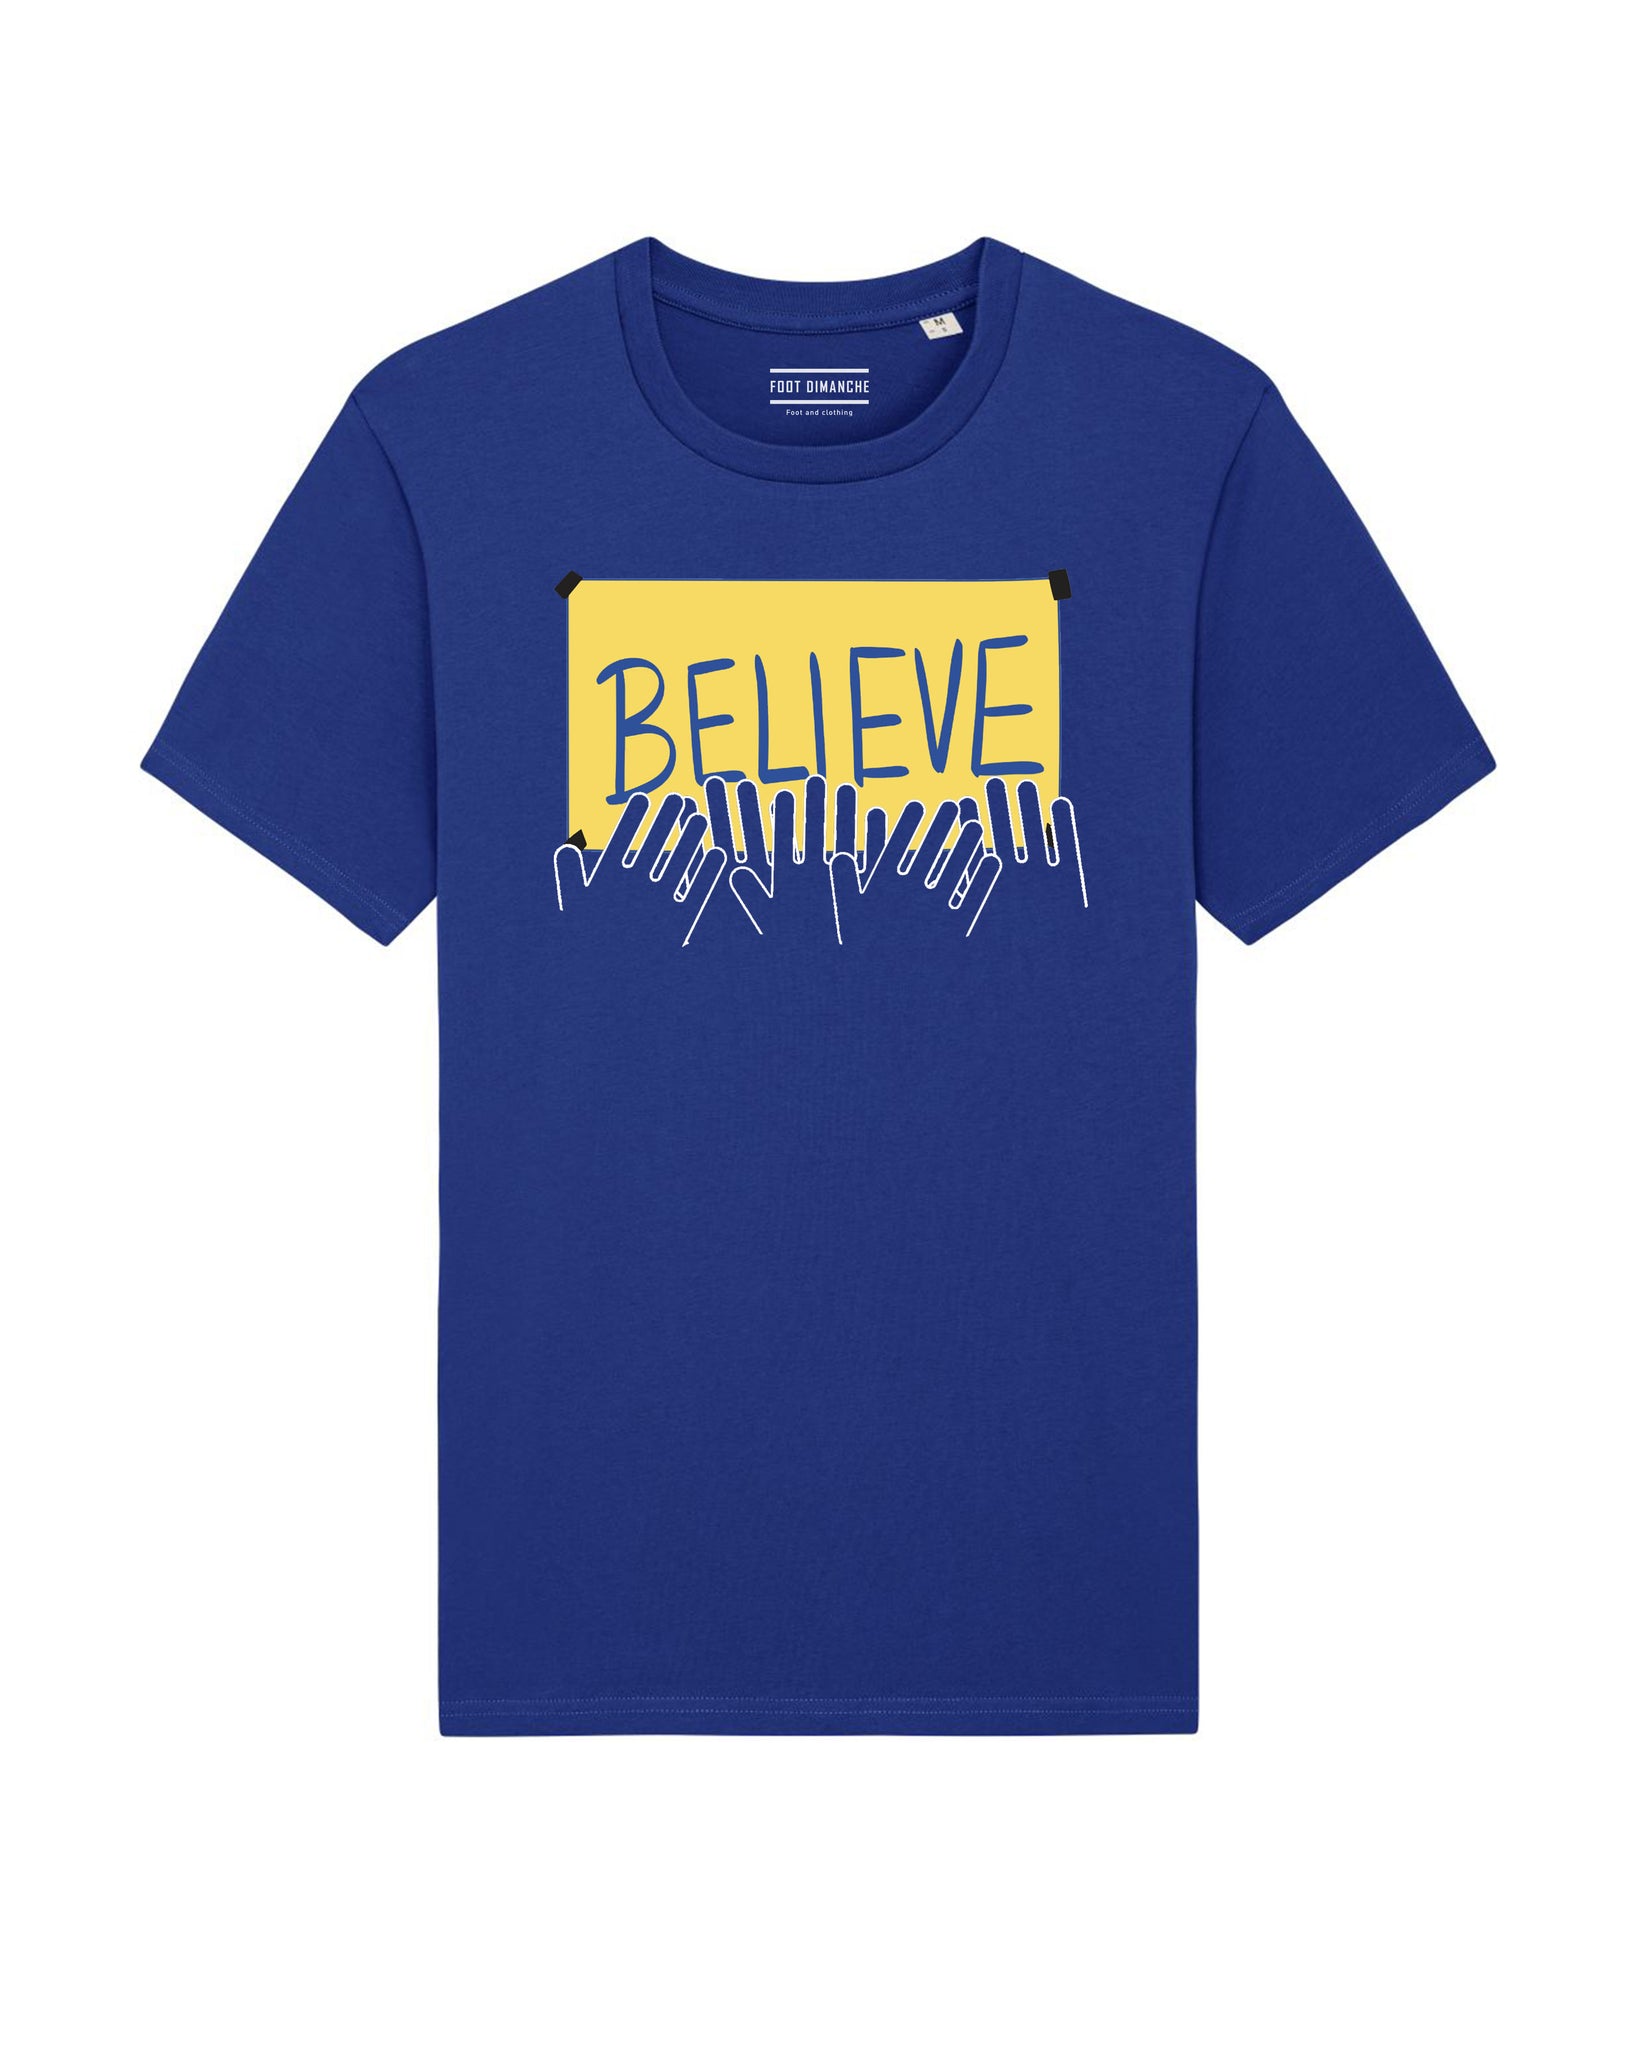 Tee Shirt Believe